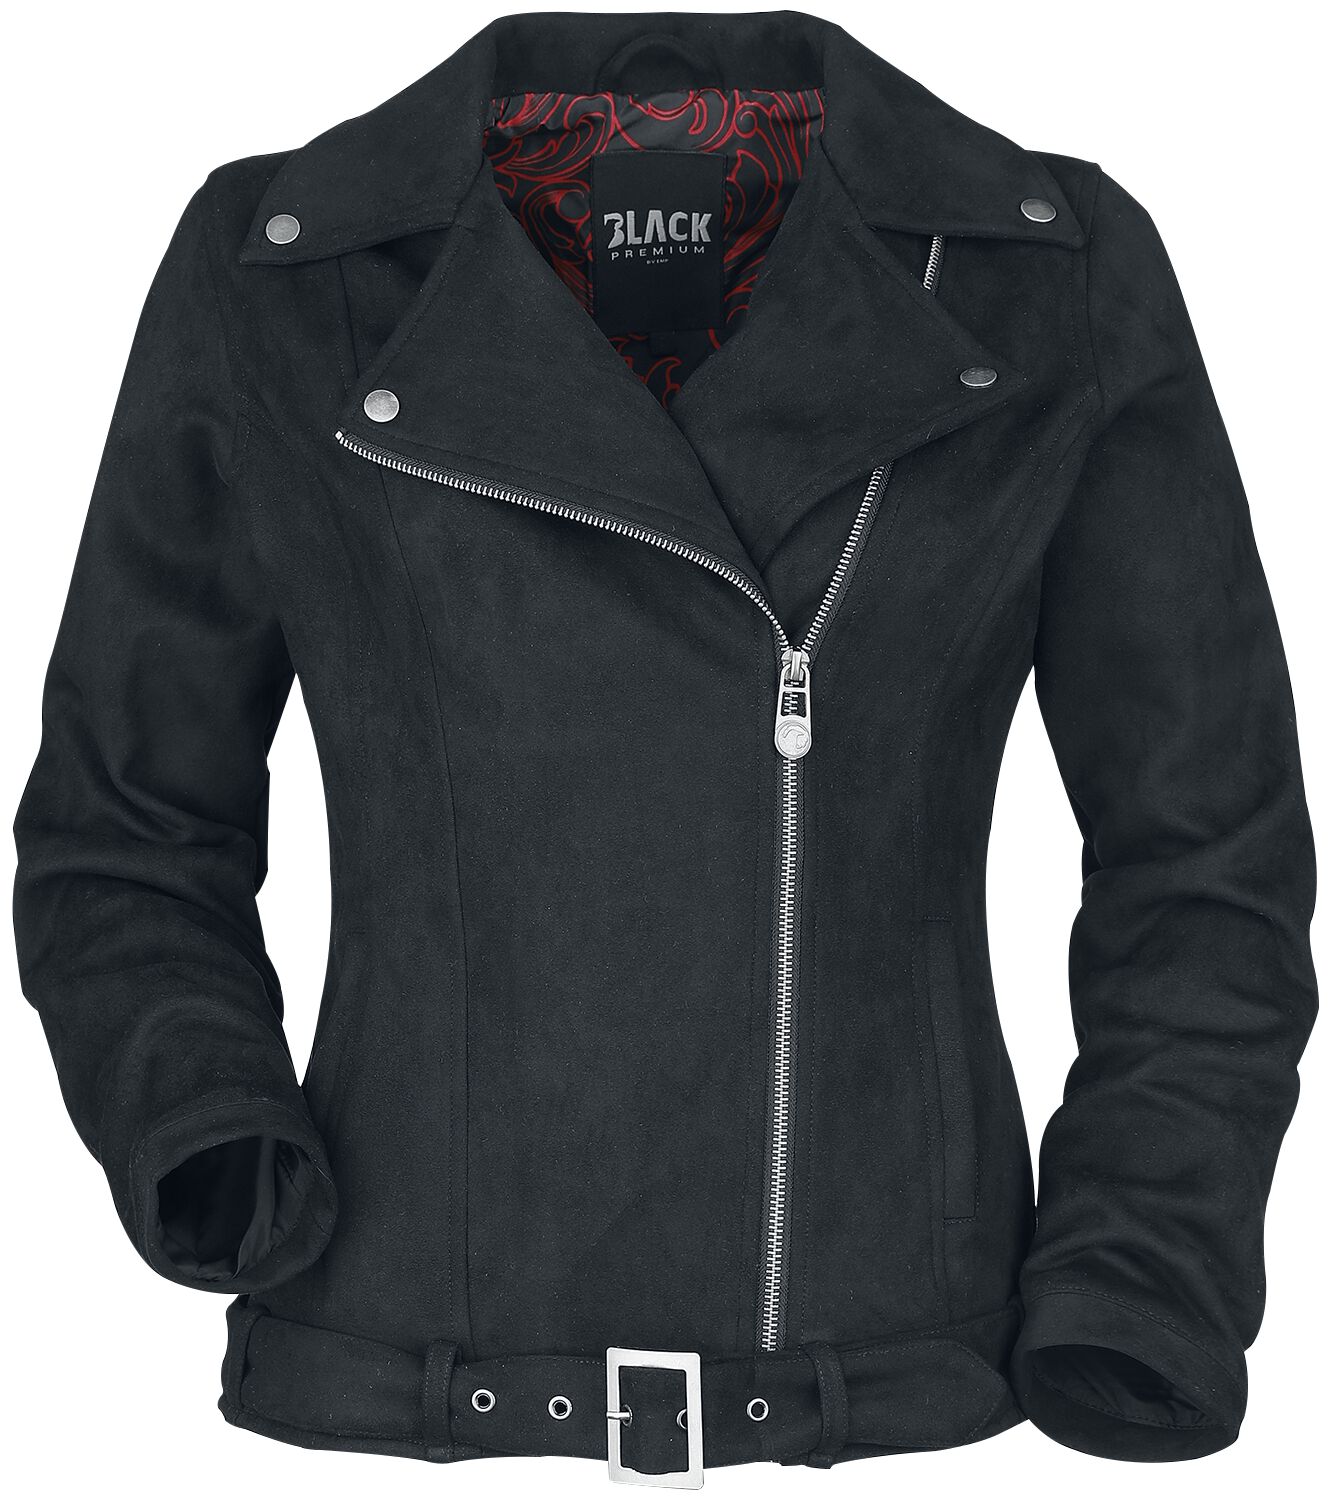 Black Premium by EMP - Faux suede leather jacket - Kunstlederjacke - schwarz - EMP Exklusiv!